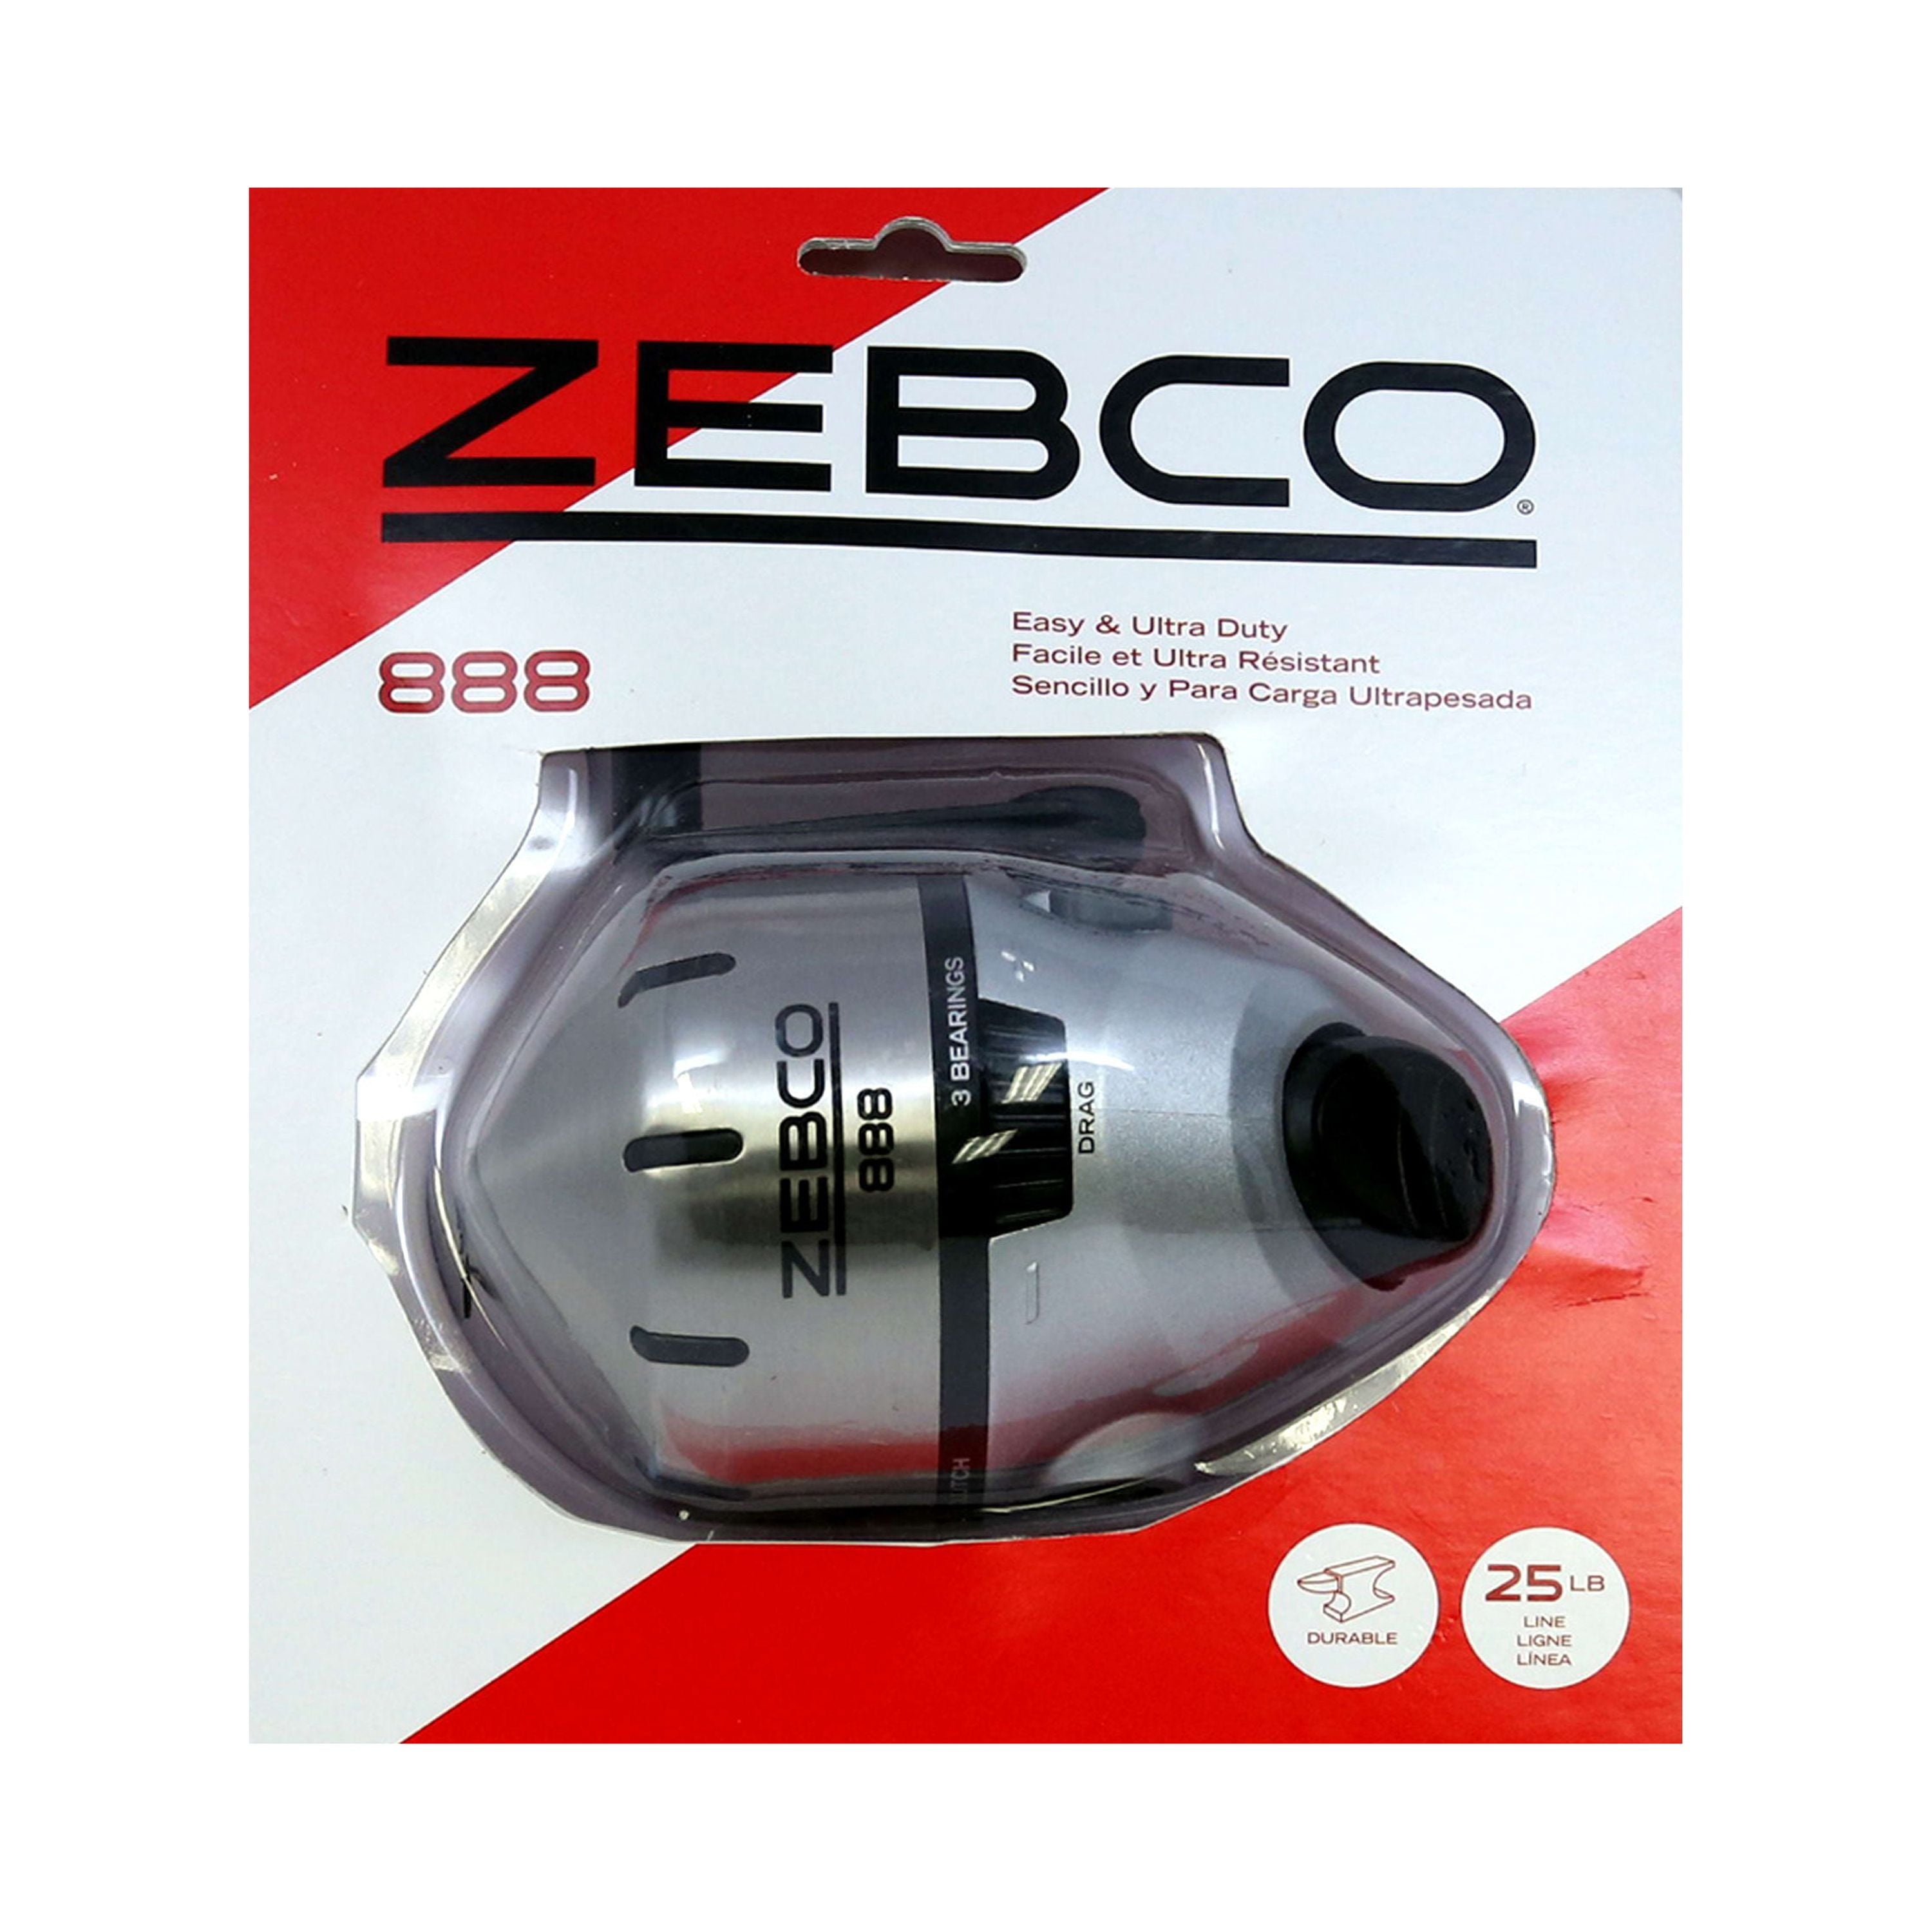 Zebco Pro Staff 888 Spincast Casting Push Button Fishing Reel